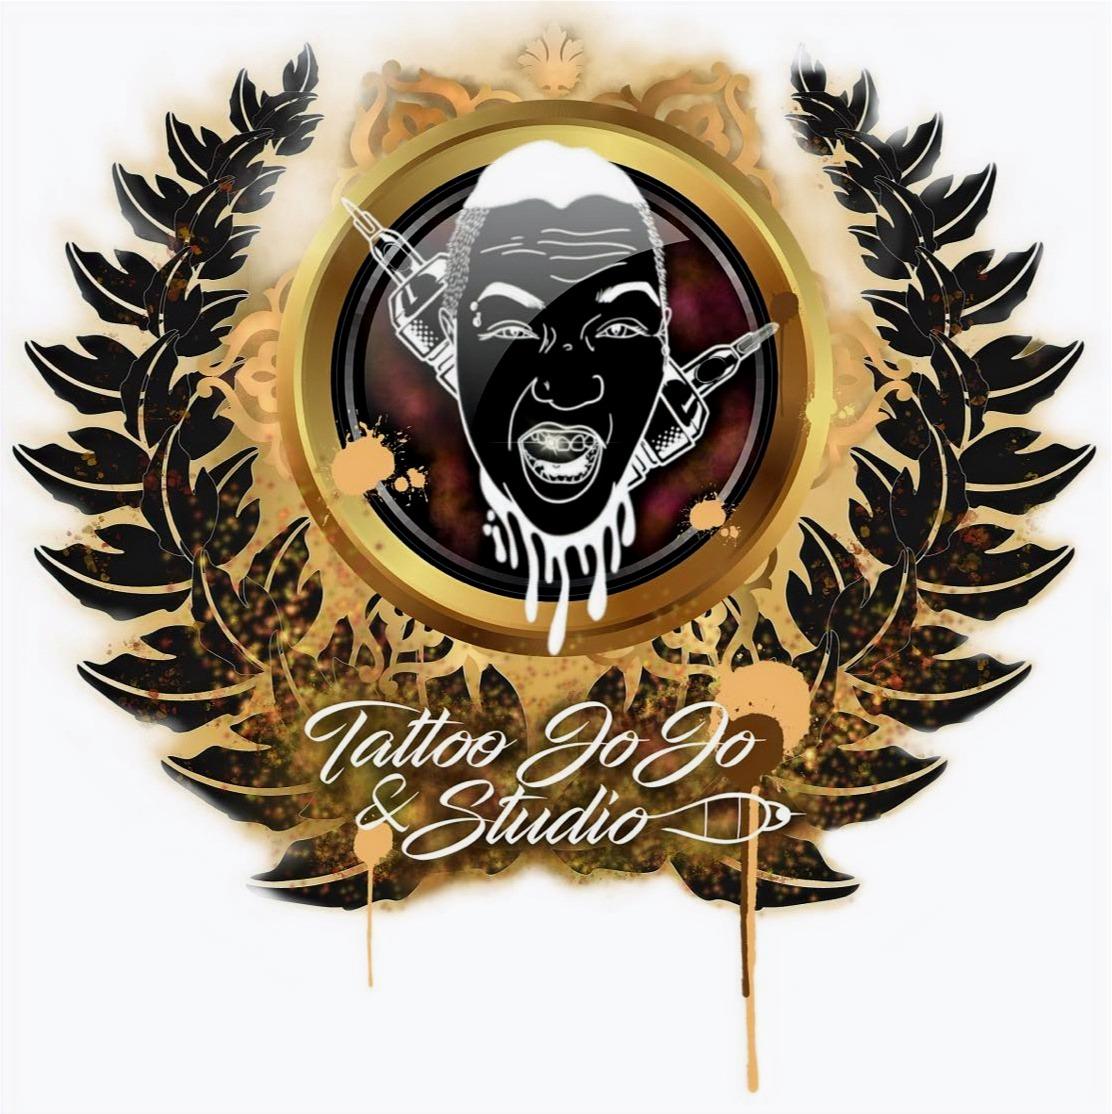 Tattoo JoJo & Studio Logo